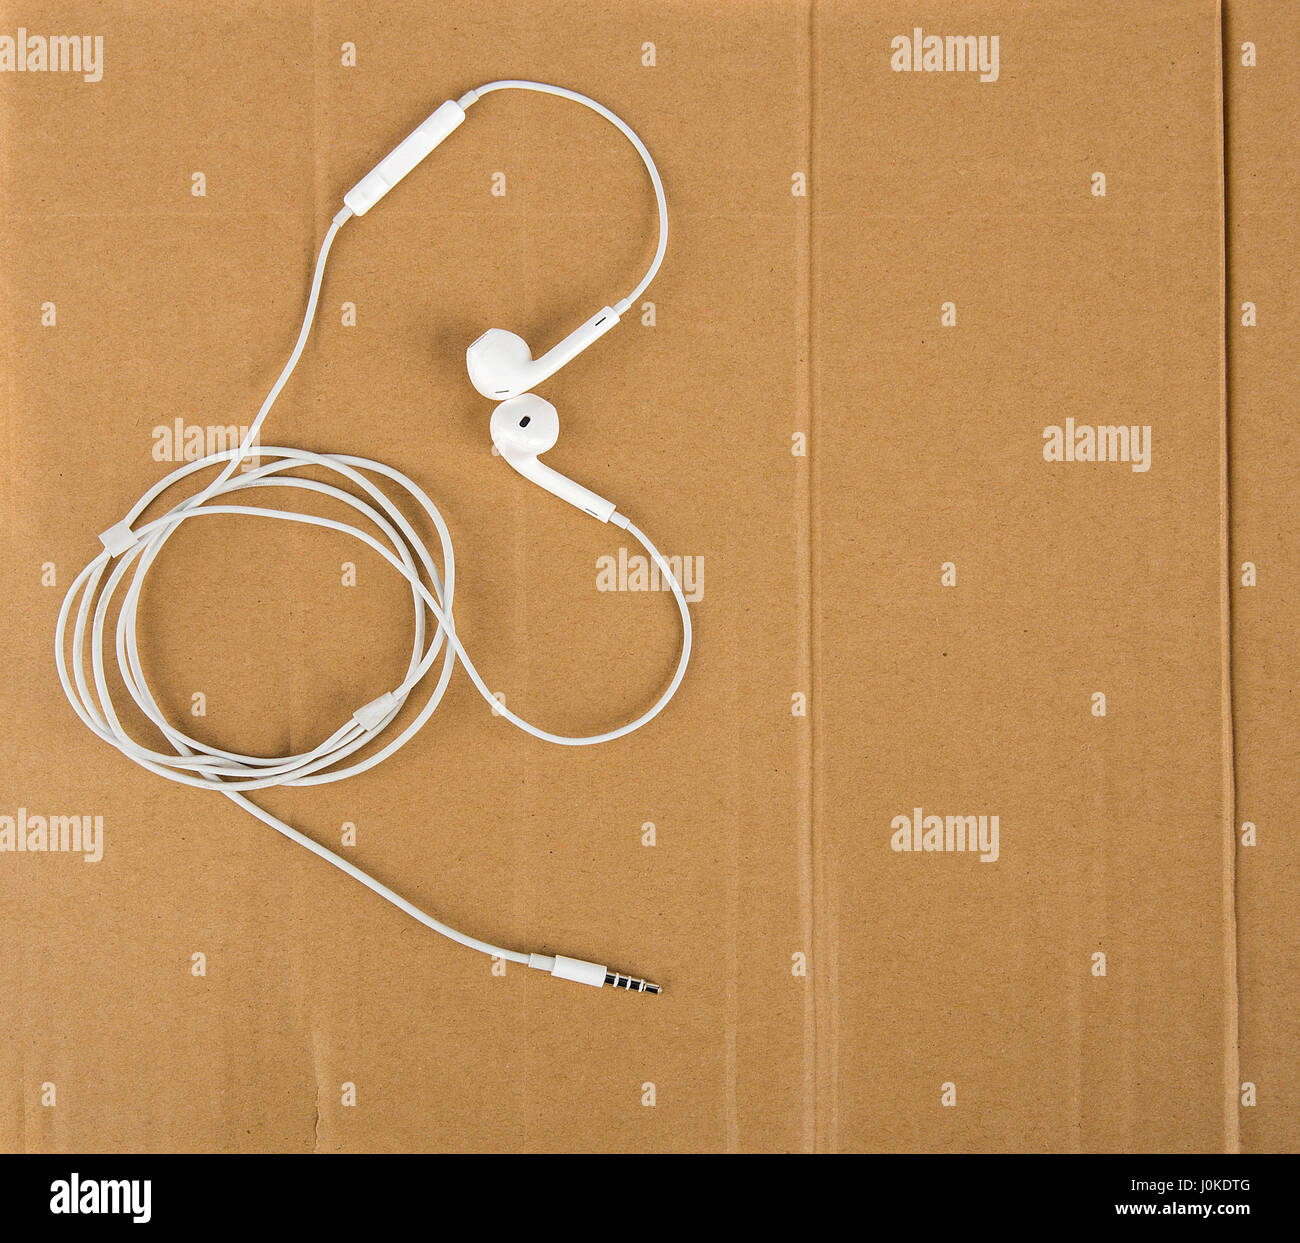 A pair of Beats MIXR headphones, in orange Stock Photo - Alamy